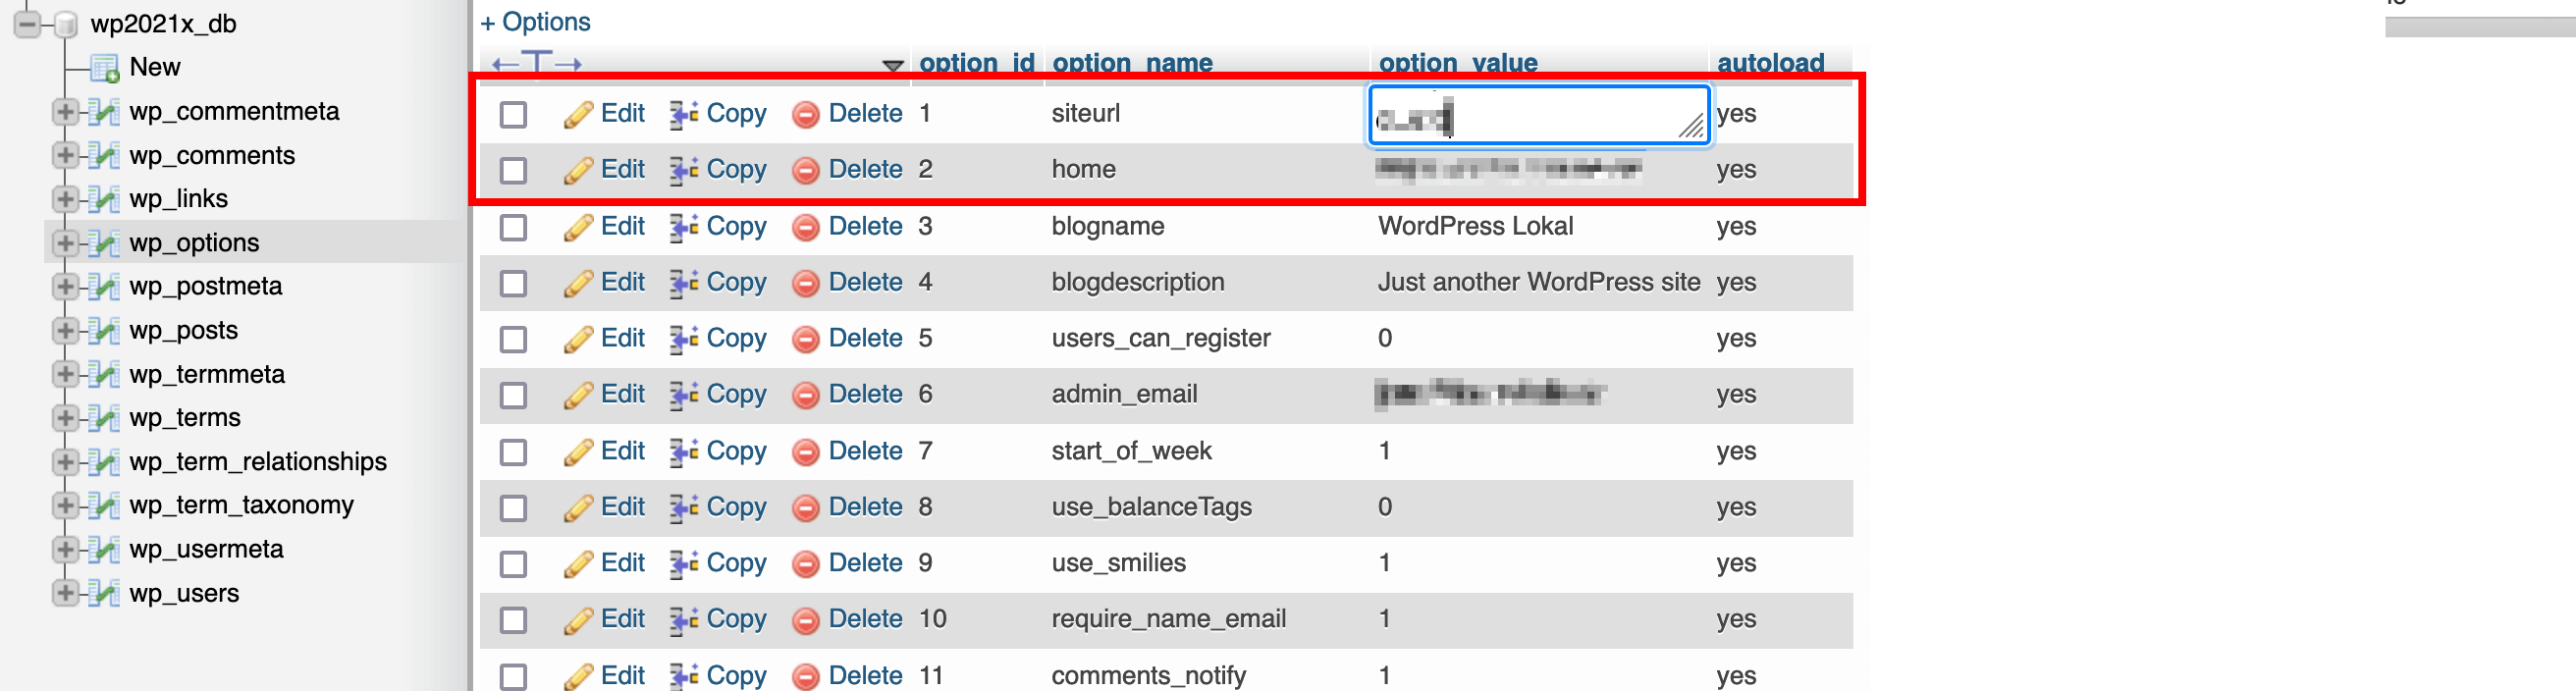 wp_options nel database di WordPress